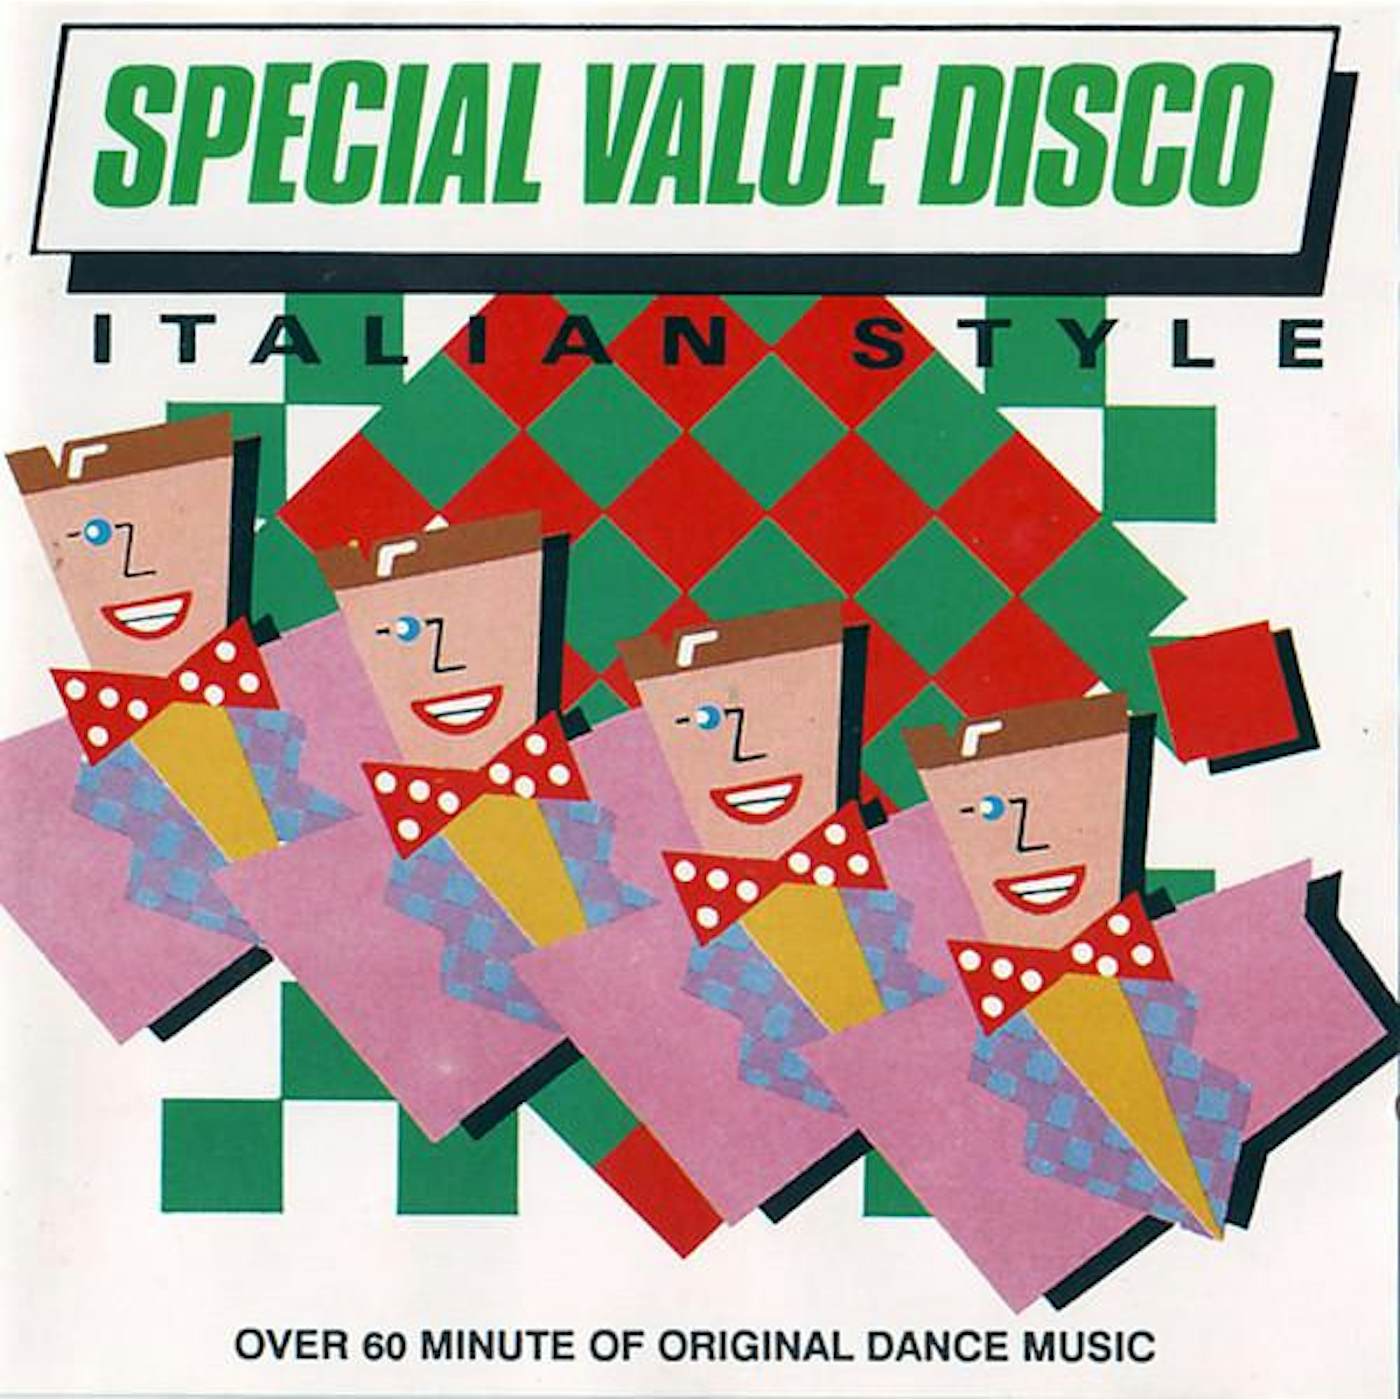 VOL. 1-ITALIAN STYLE / VARIOUS Vinyl Record - UK Release